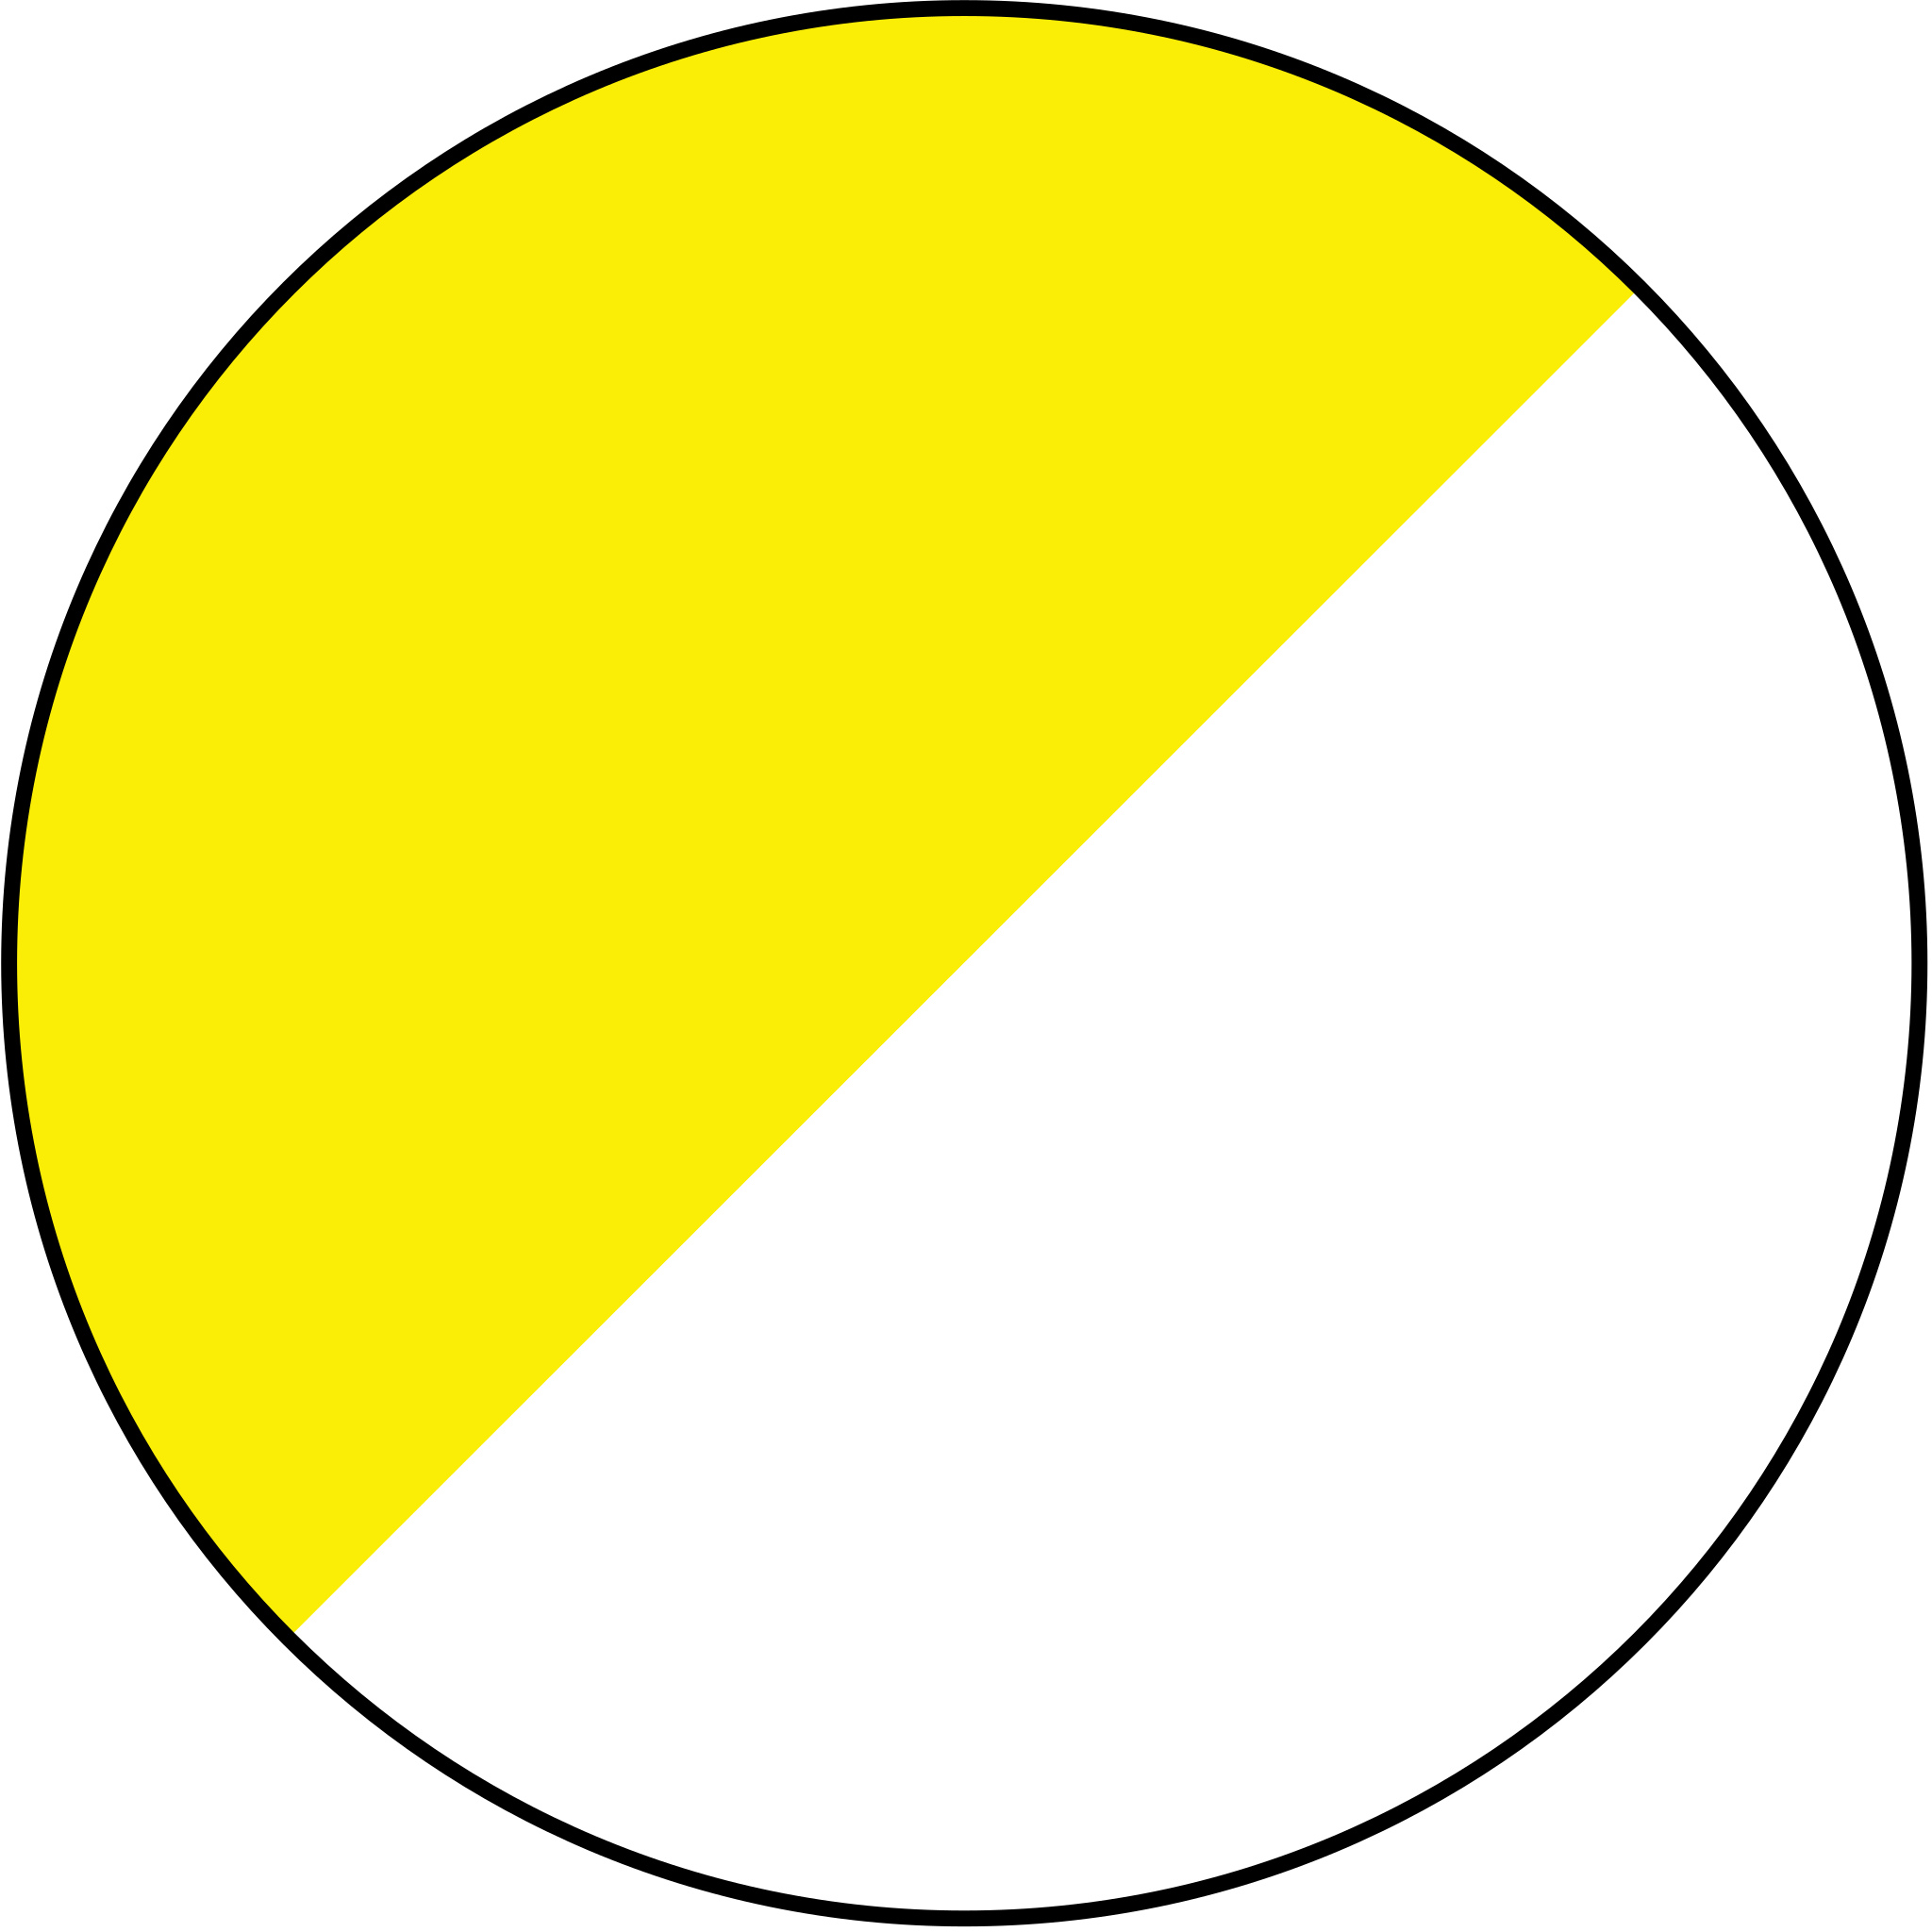 Картинка полукруг. Желтый полукруг. Половина круга. Желтый кружок. Желтые кружочки.